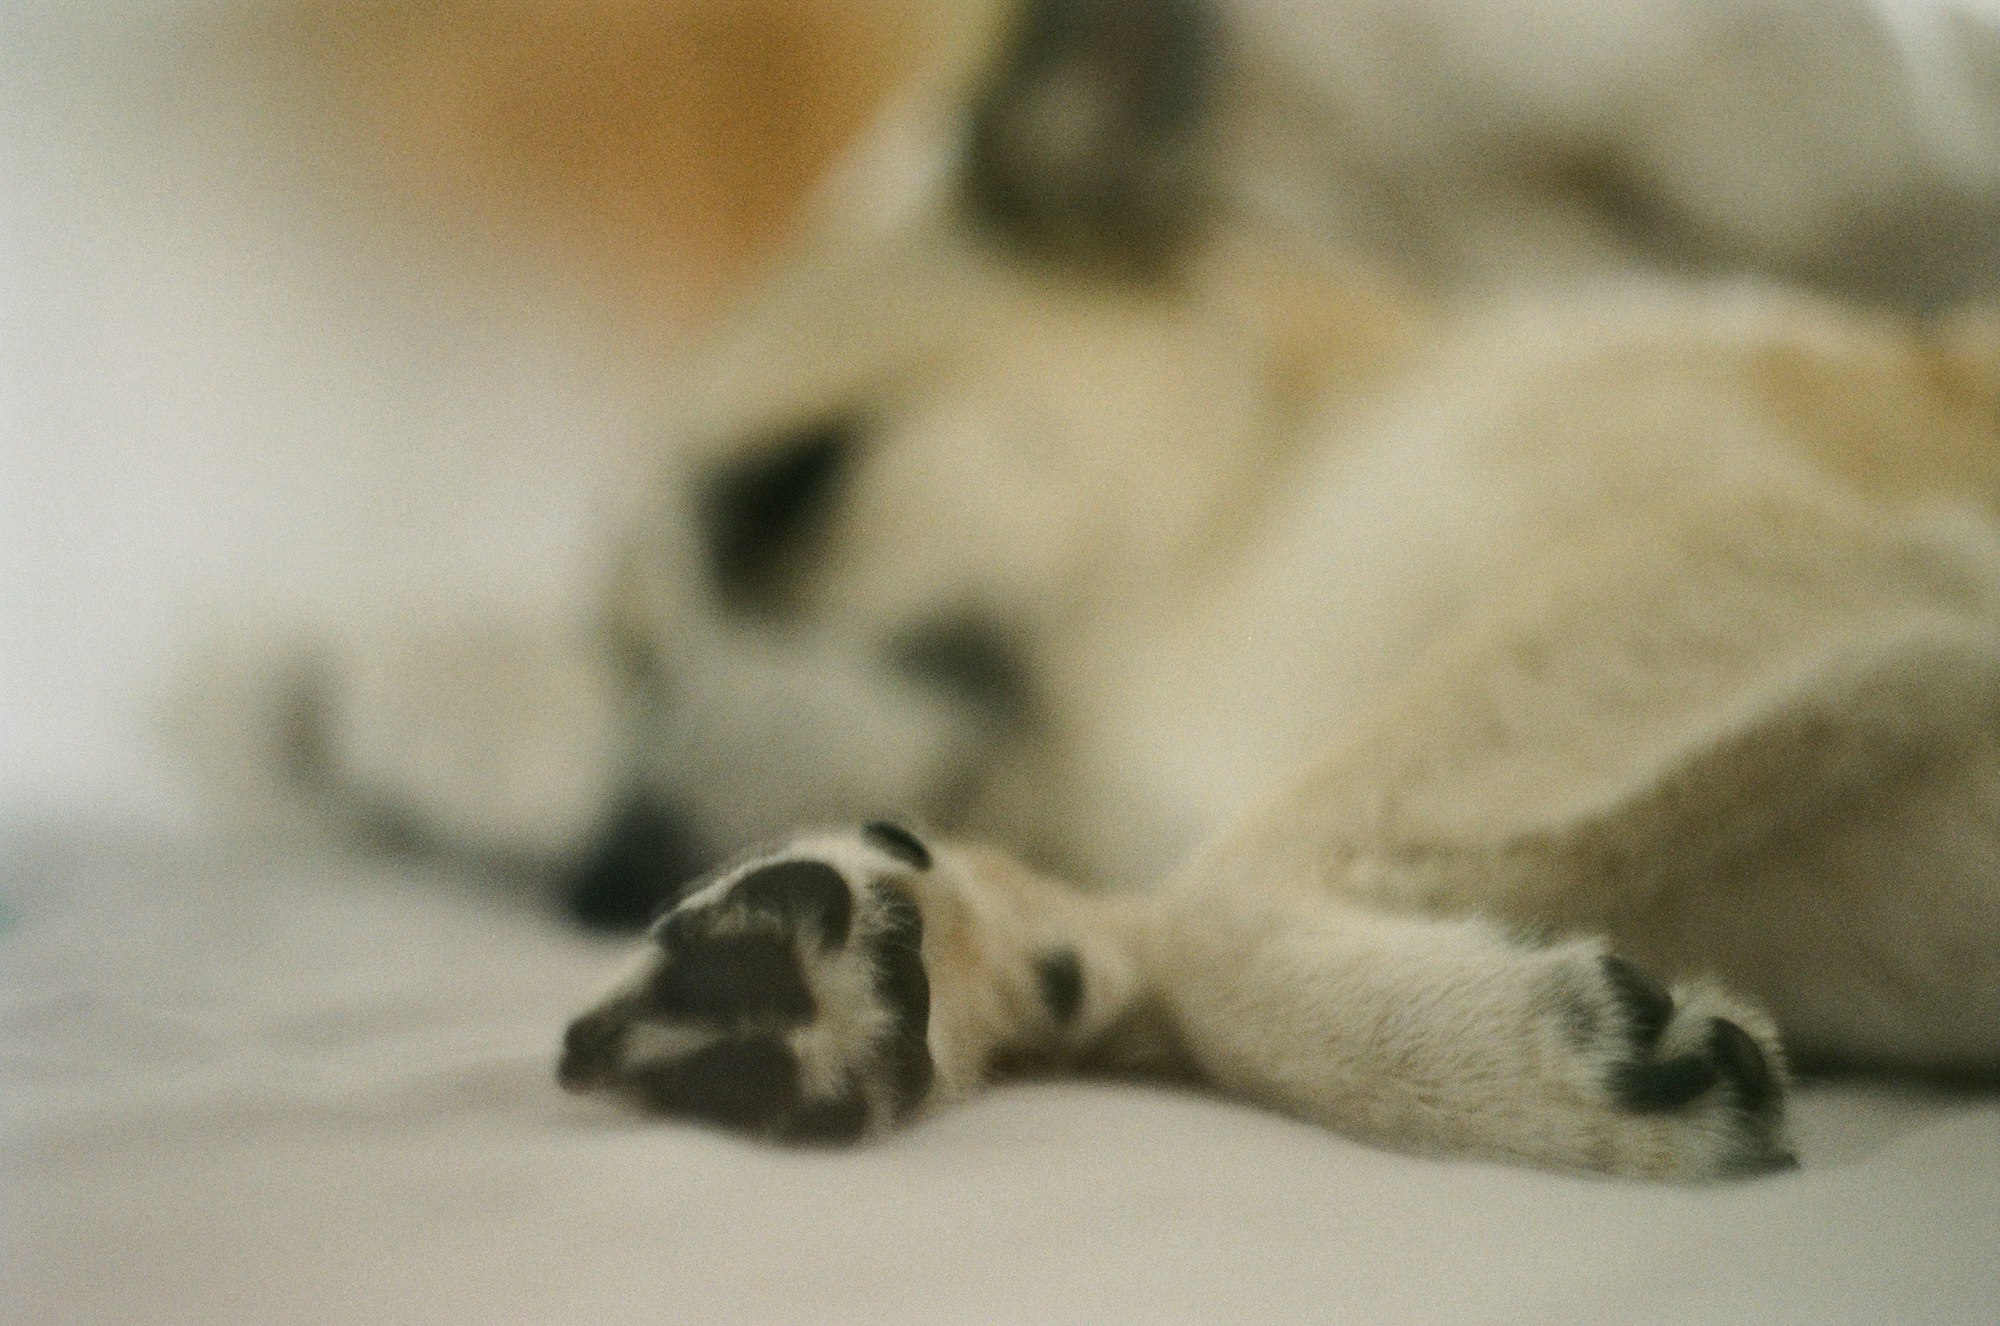 Dog's paws analog film photo
